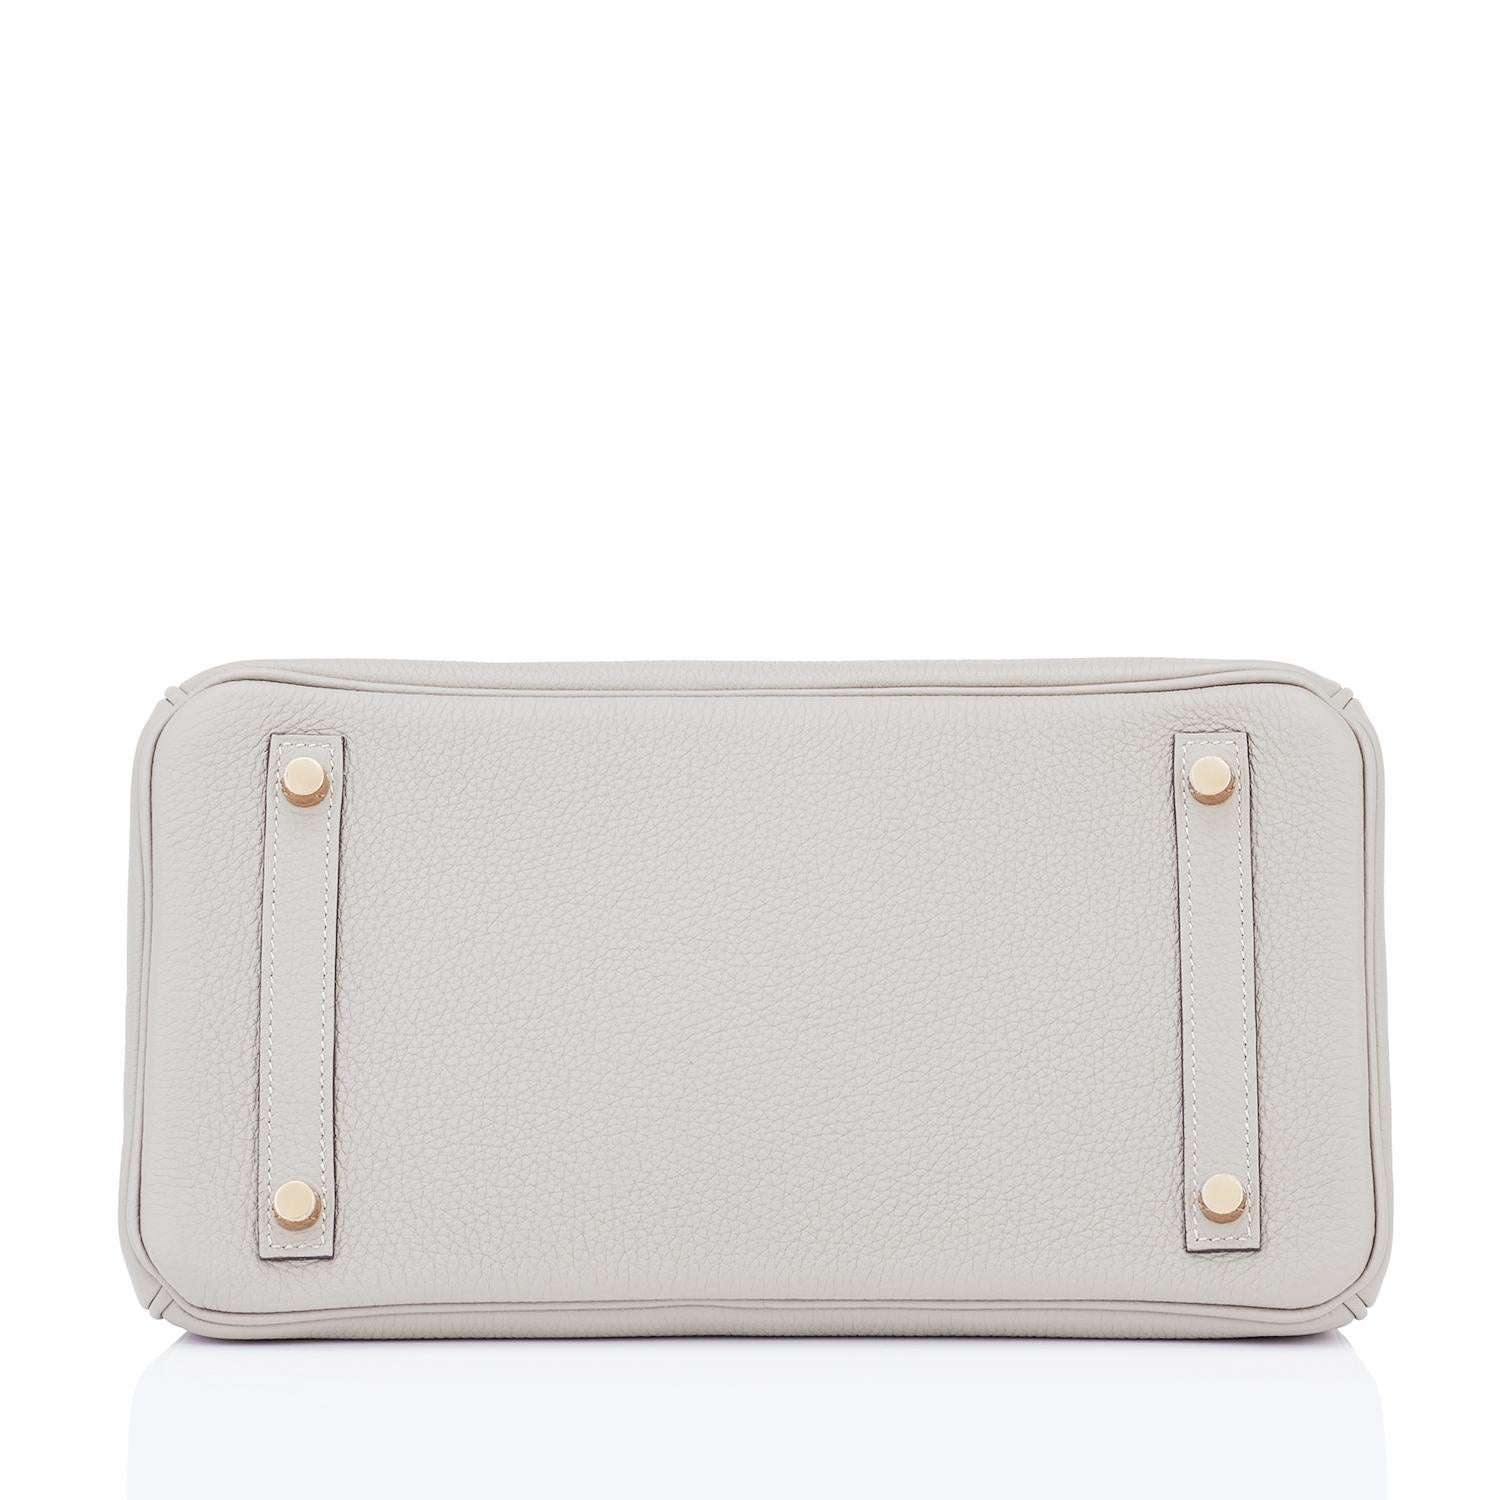 Hermes Birkin 30cm Gris Perle Togo Bag Gold Hardware Pearl Gray  For Sale 2